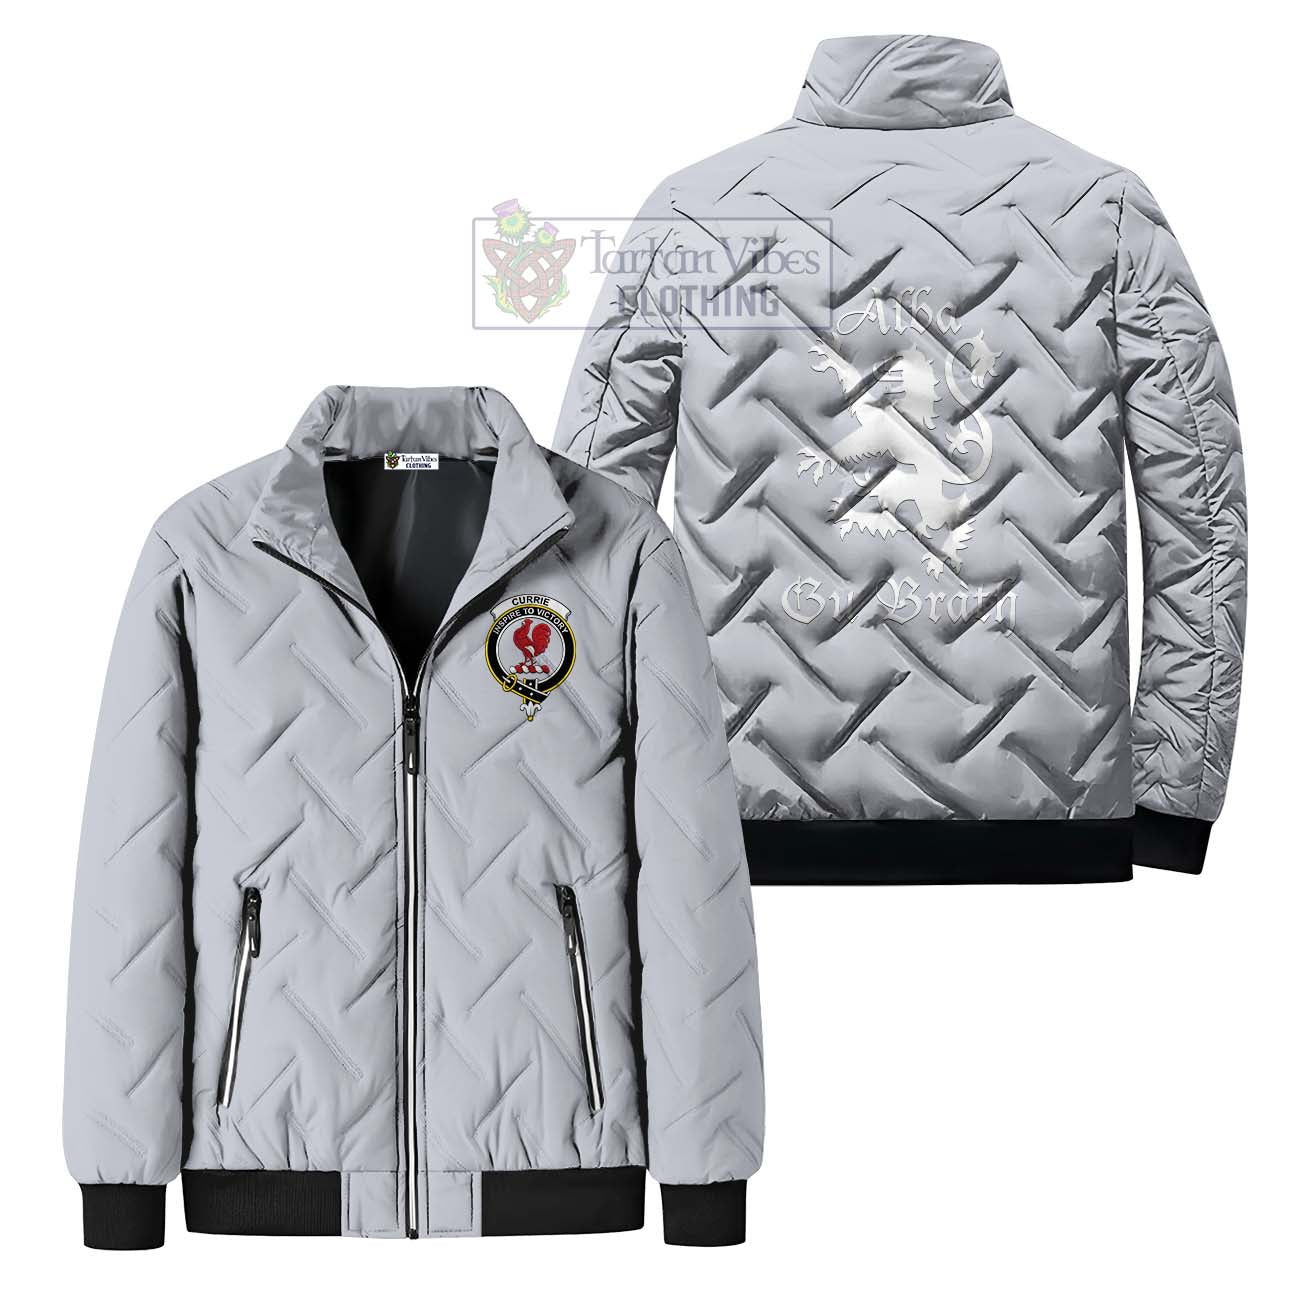 Tartan Vibes Clothing Currie Family Crest Padded Cotton Jacket Lion Rampant Alba Gu Brath Style